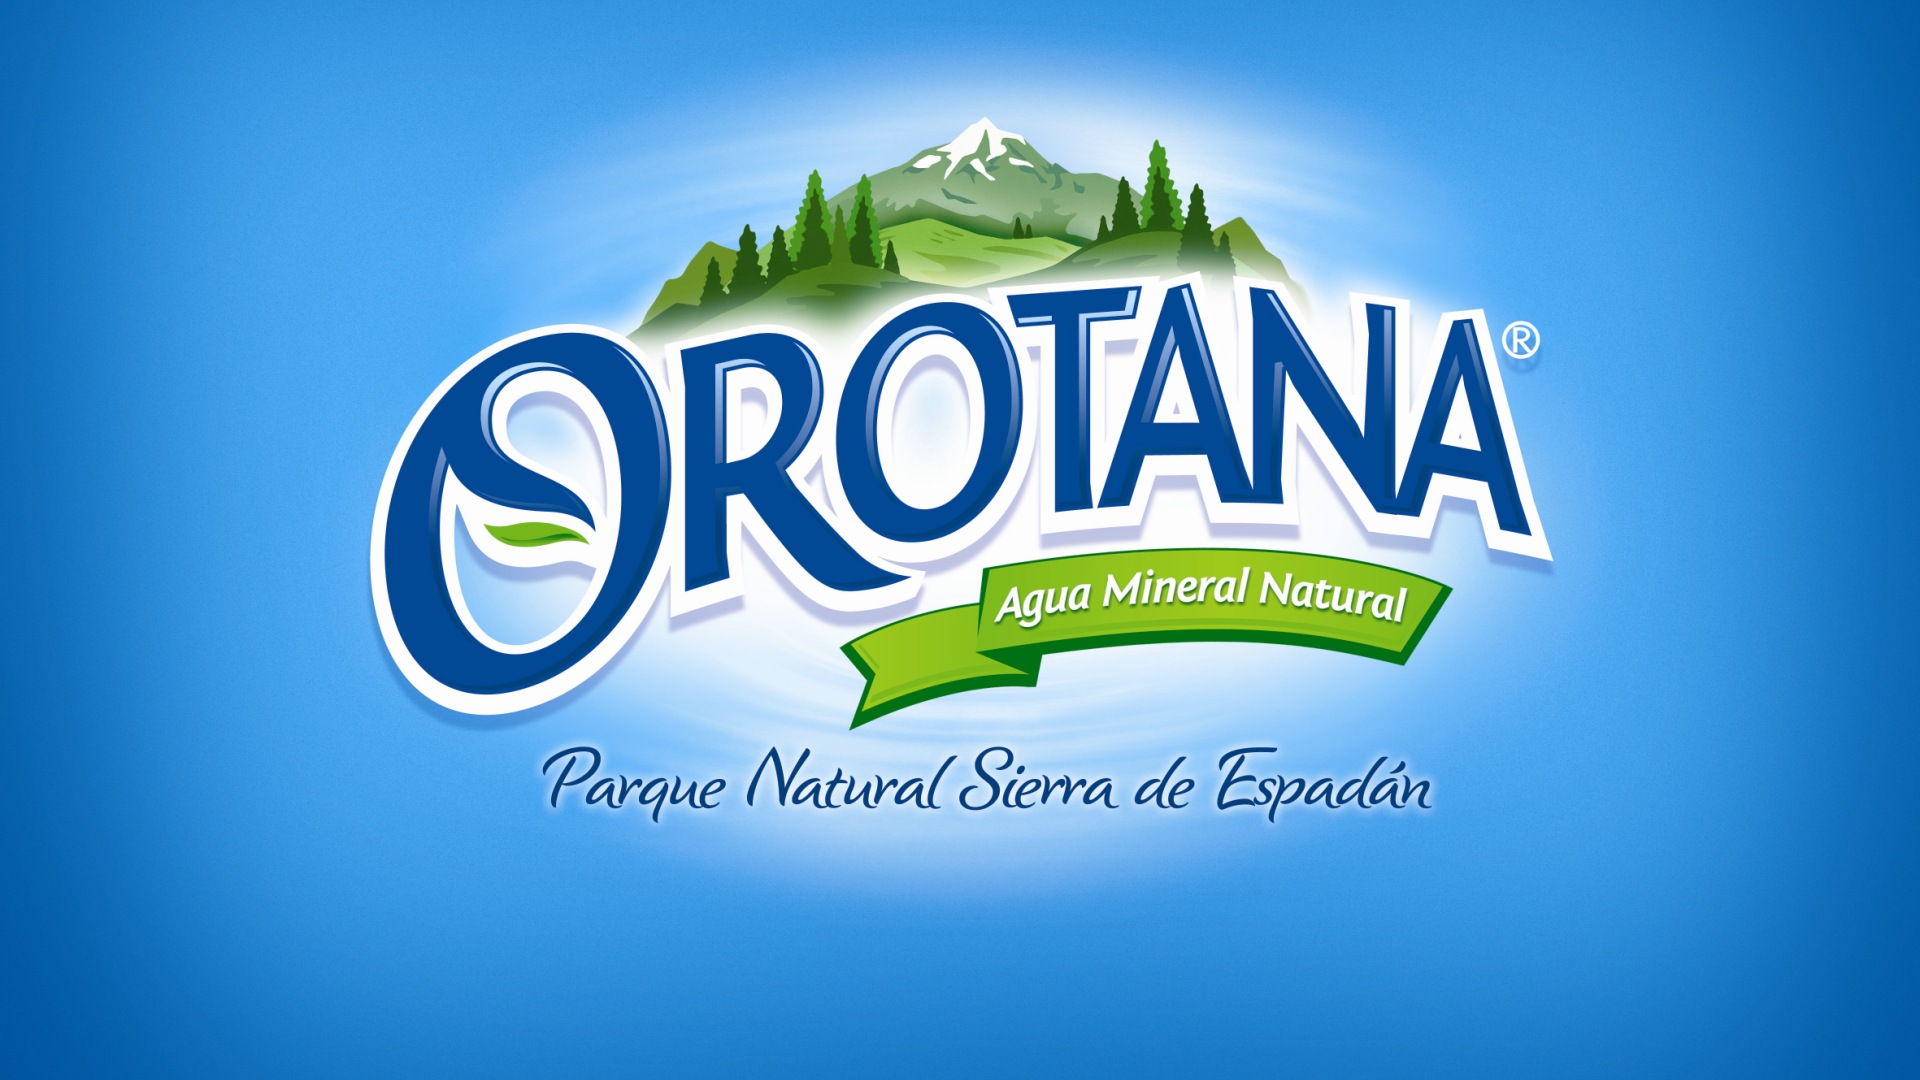 Orotana, Agua mineral natural del Parque Natural Sierra